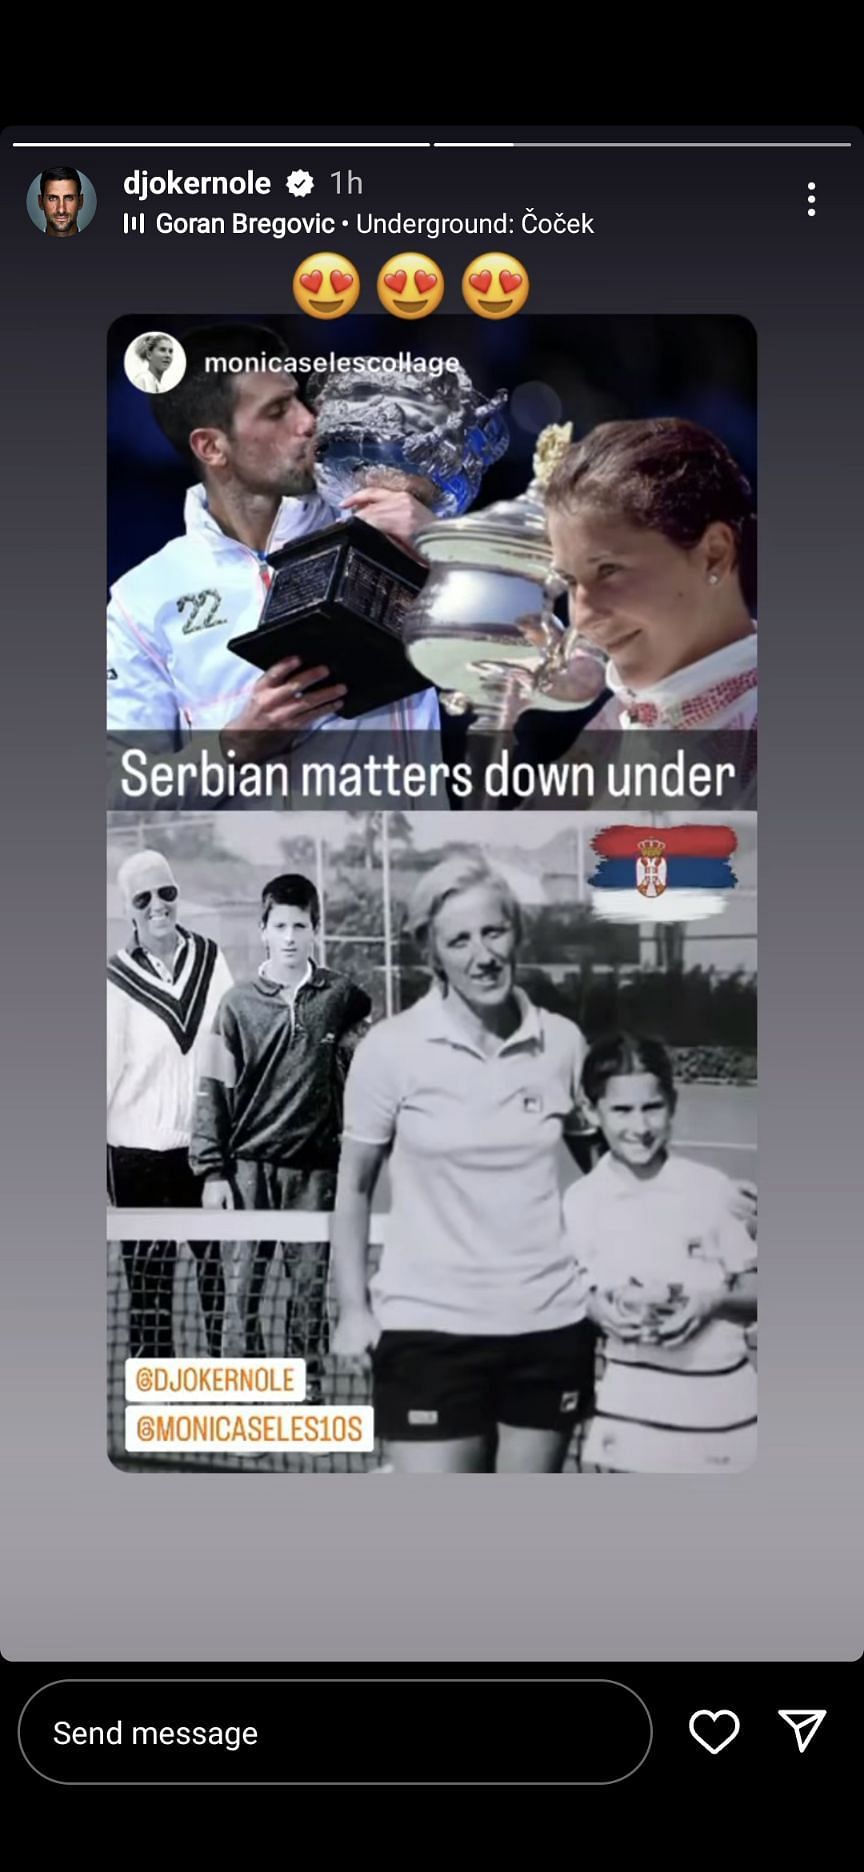 Snapshots of Novak Djokovic and Monica Seles with Jelena Gencic